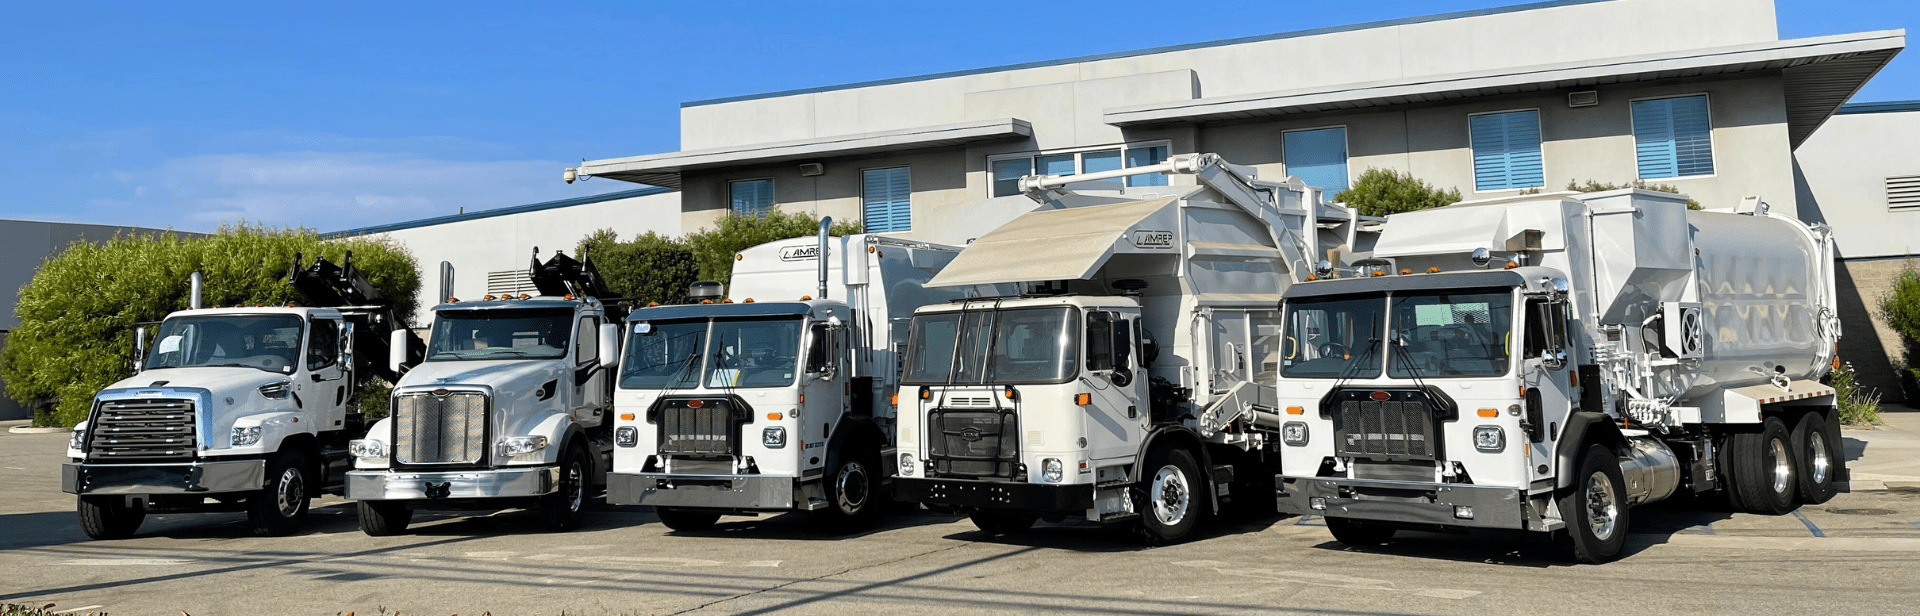 refuse trucks lined up outside wastebuilt facility